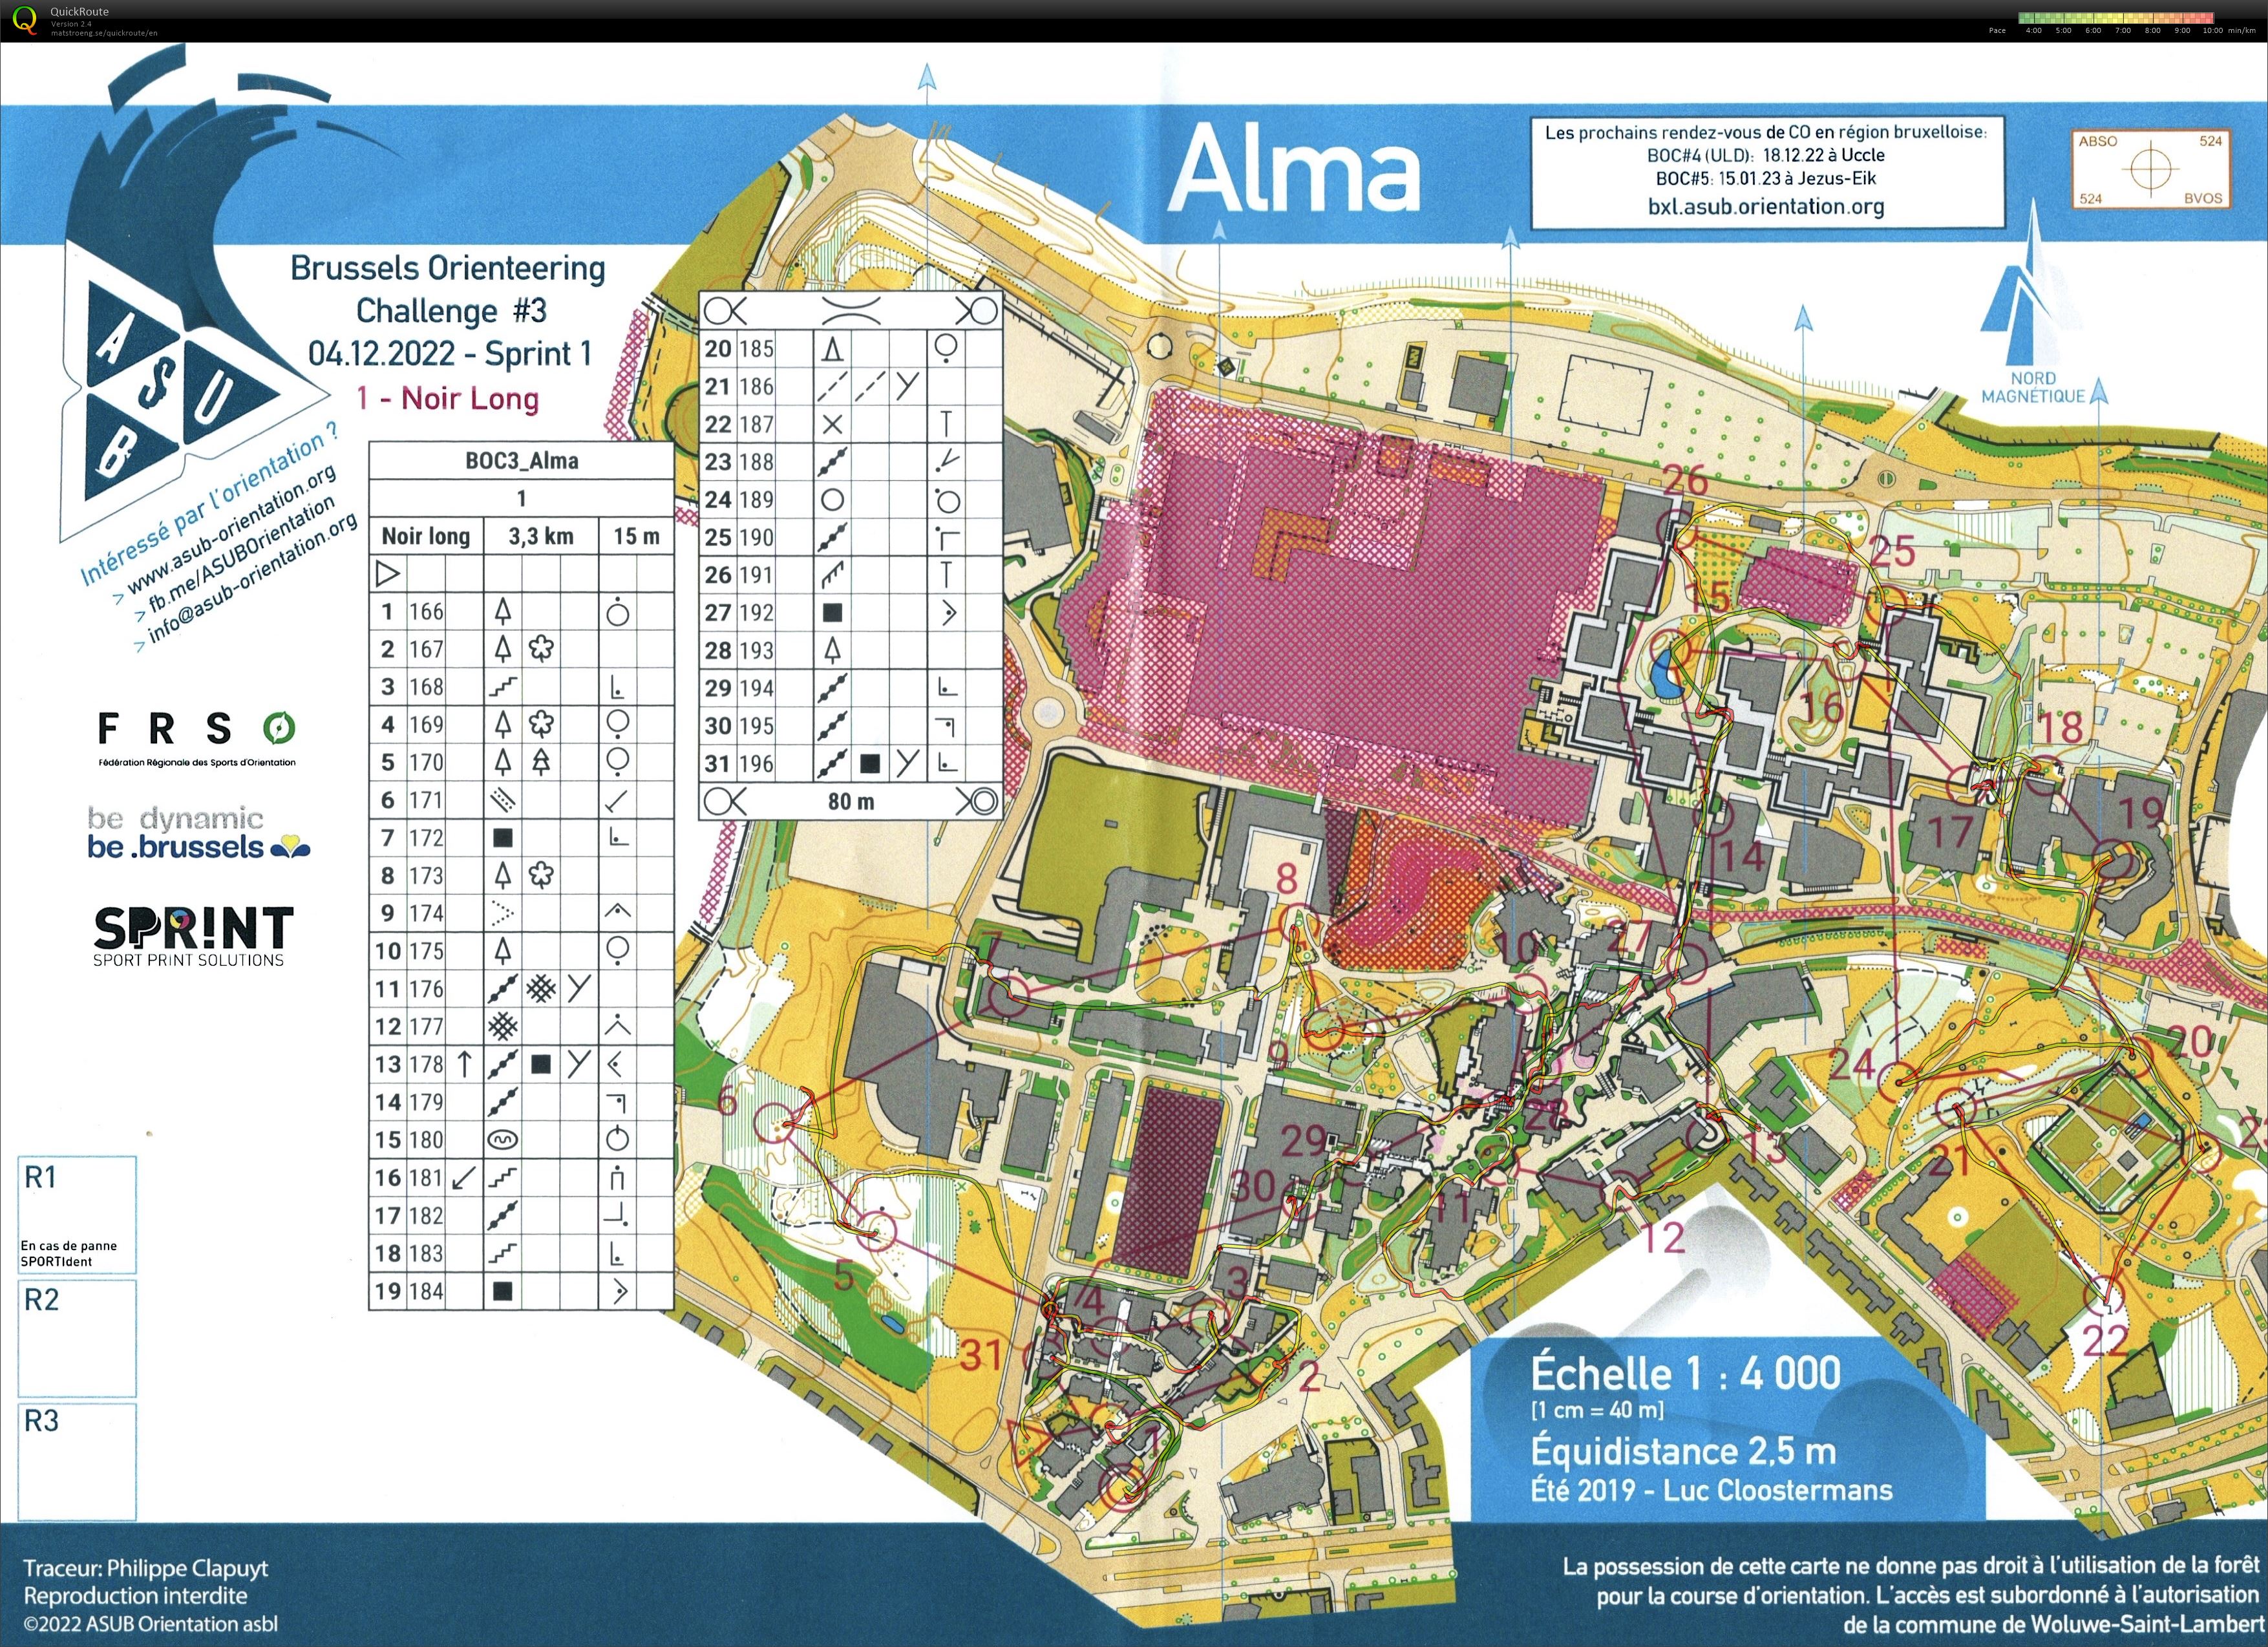 Brussels Orienteering Challenge #3 - Sprint 1 - Alma (04/12/2022)